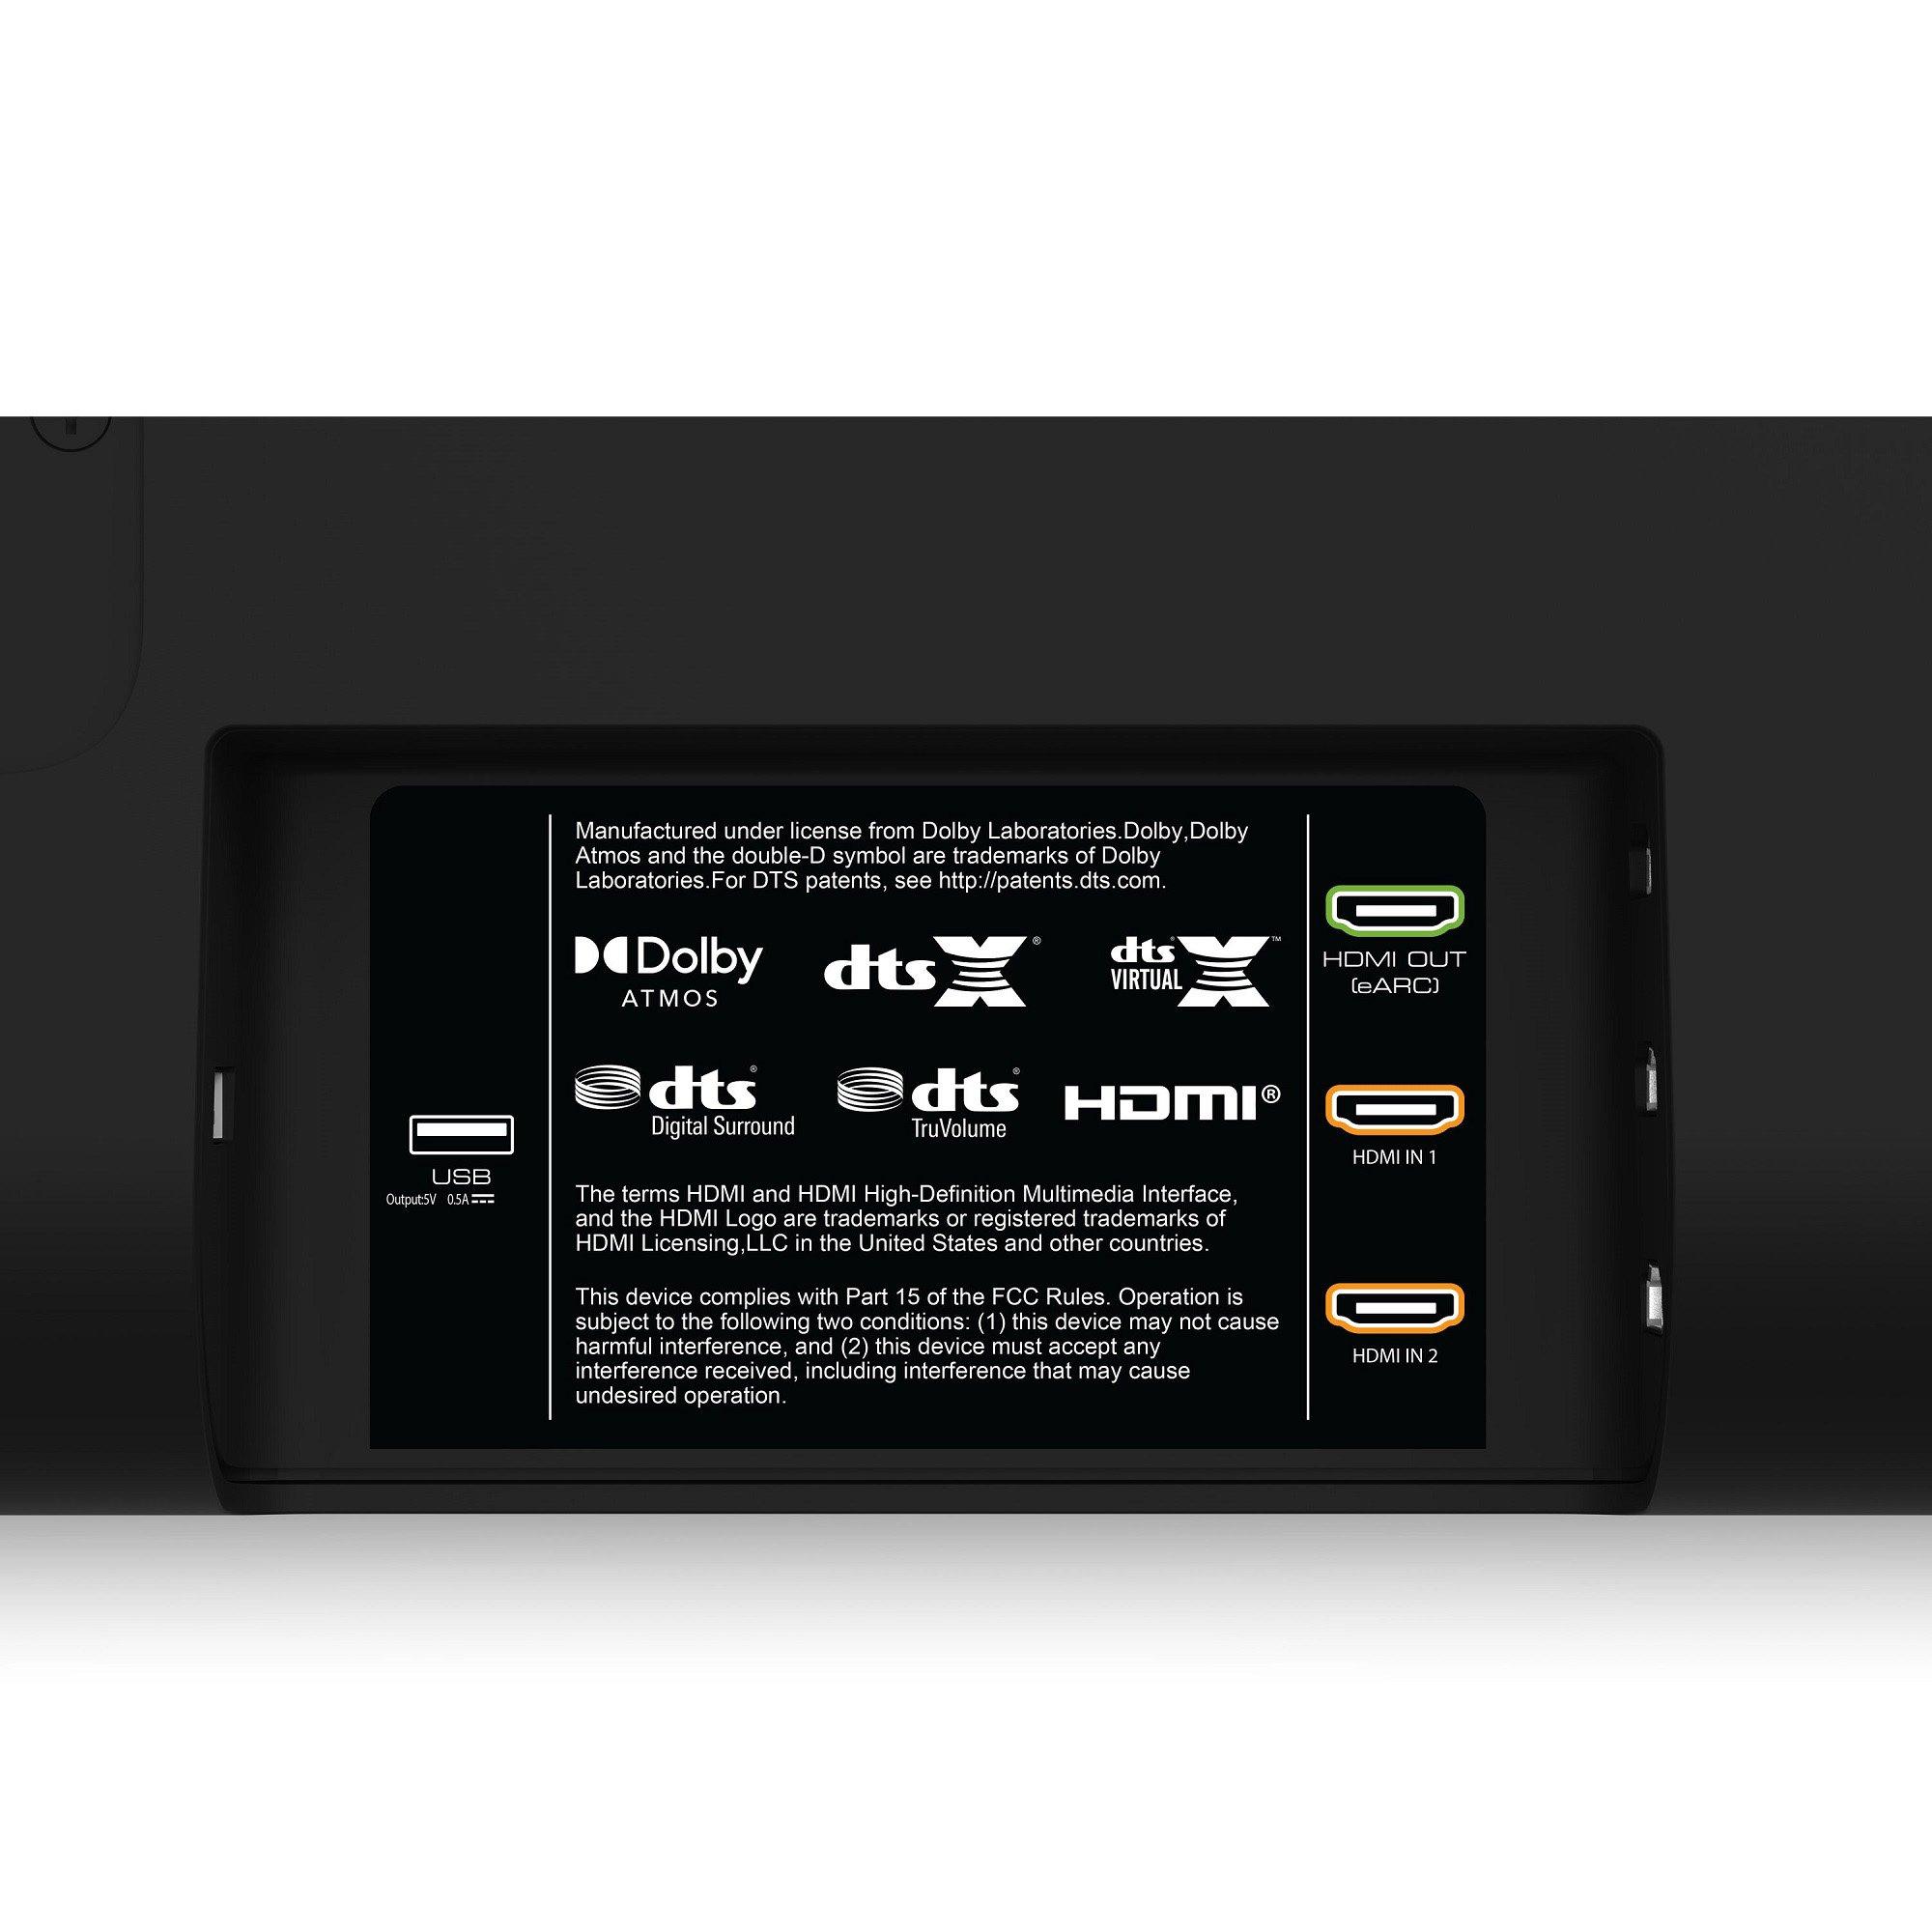 Vizio 5.1.4 Dolby Atmos Soundbar Home Theater System Review - SB36541-G6